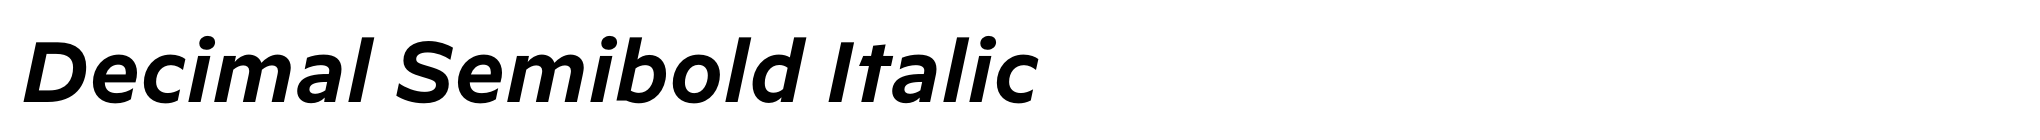 Decimal Semibold Italic image